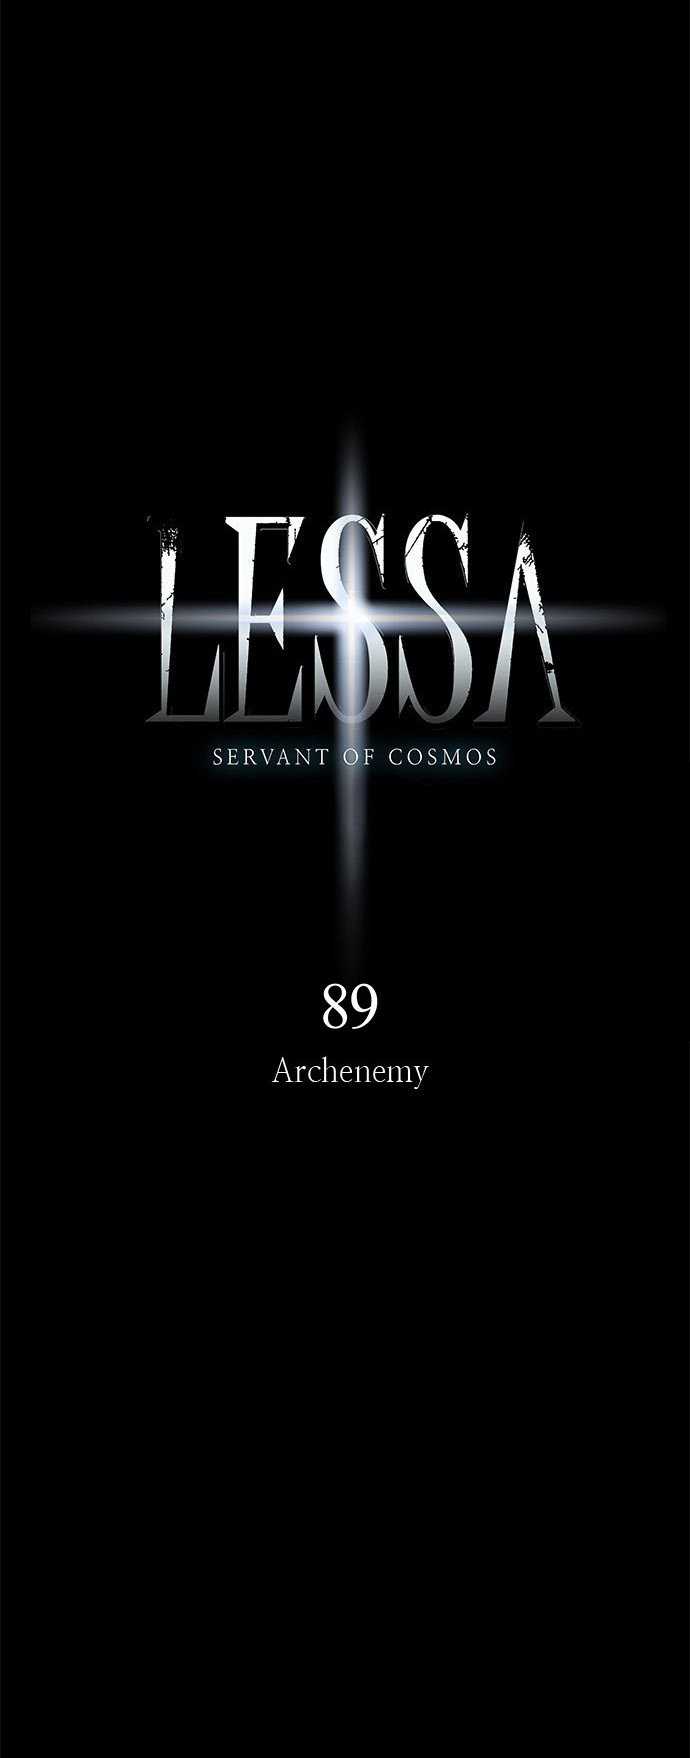 LESSA – Servant of Cosmos Chapter 89